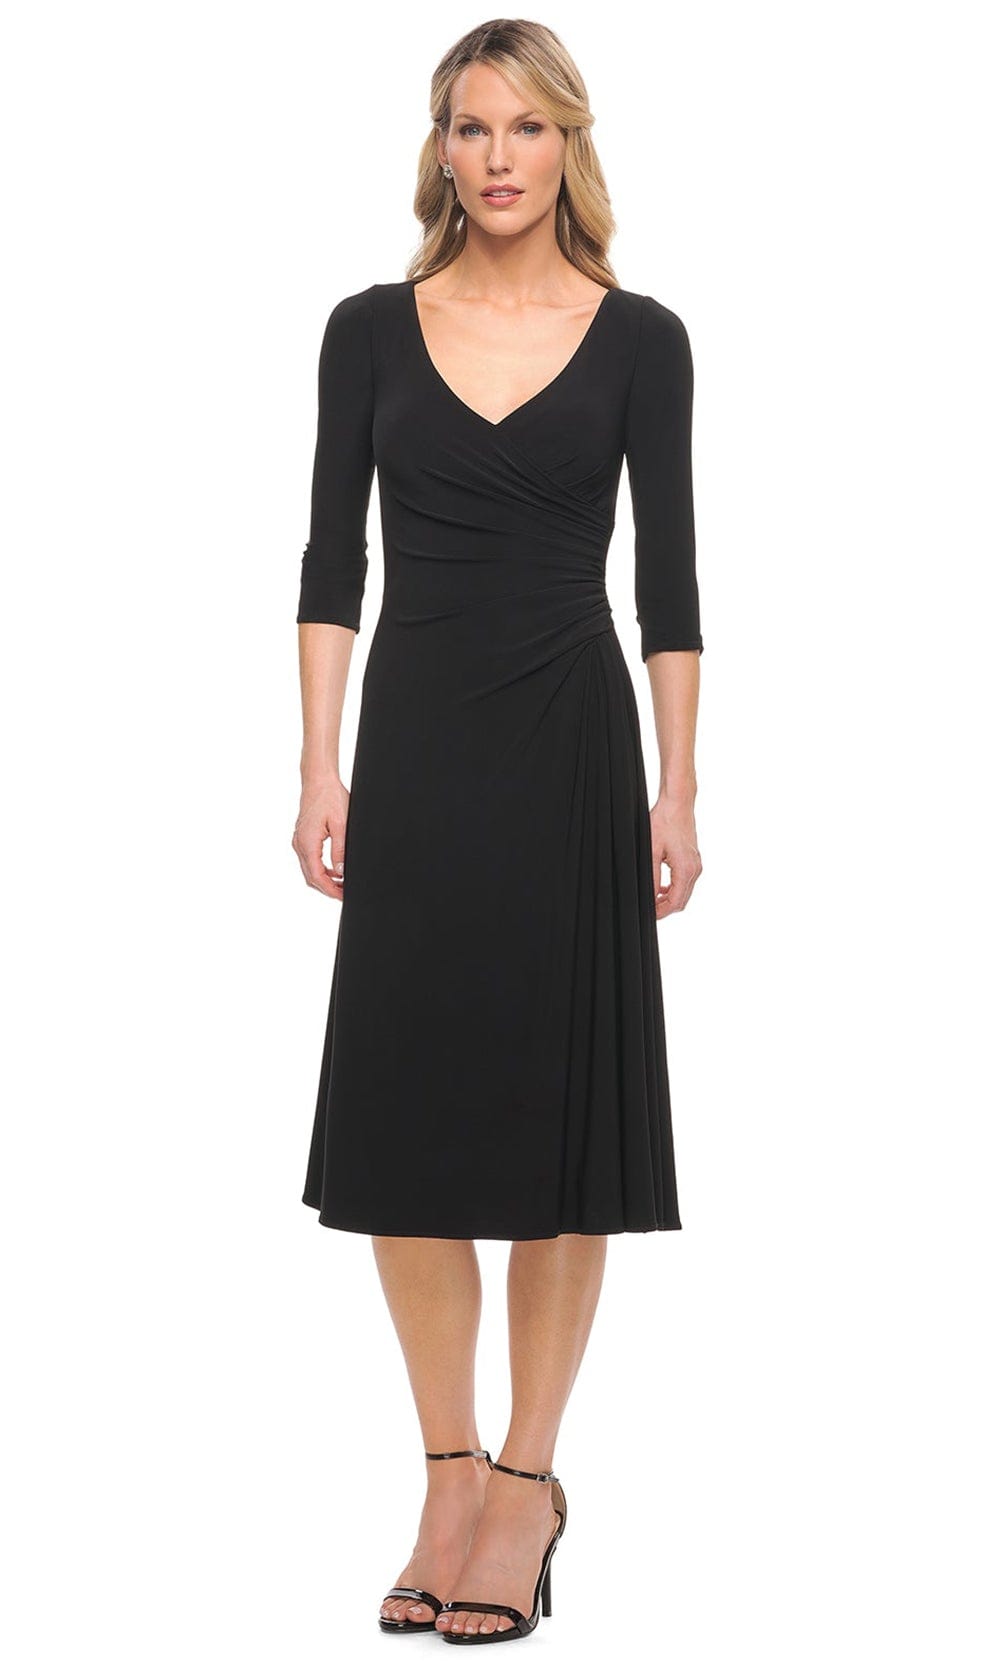 La Femme 30069 - A-Line Knee-Length Dress
